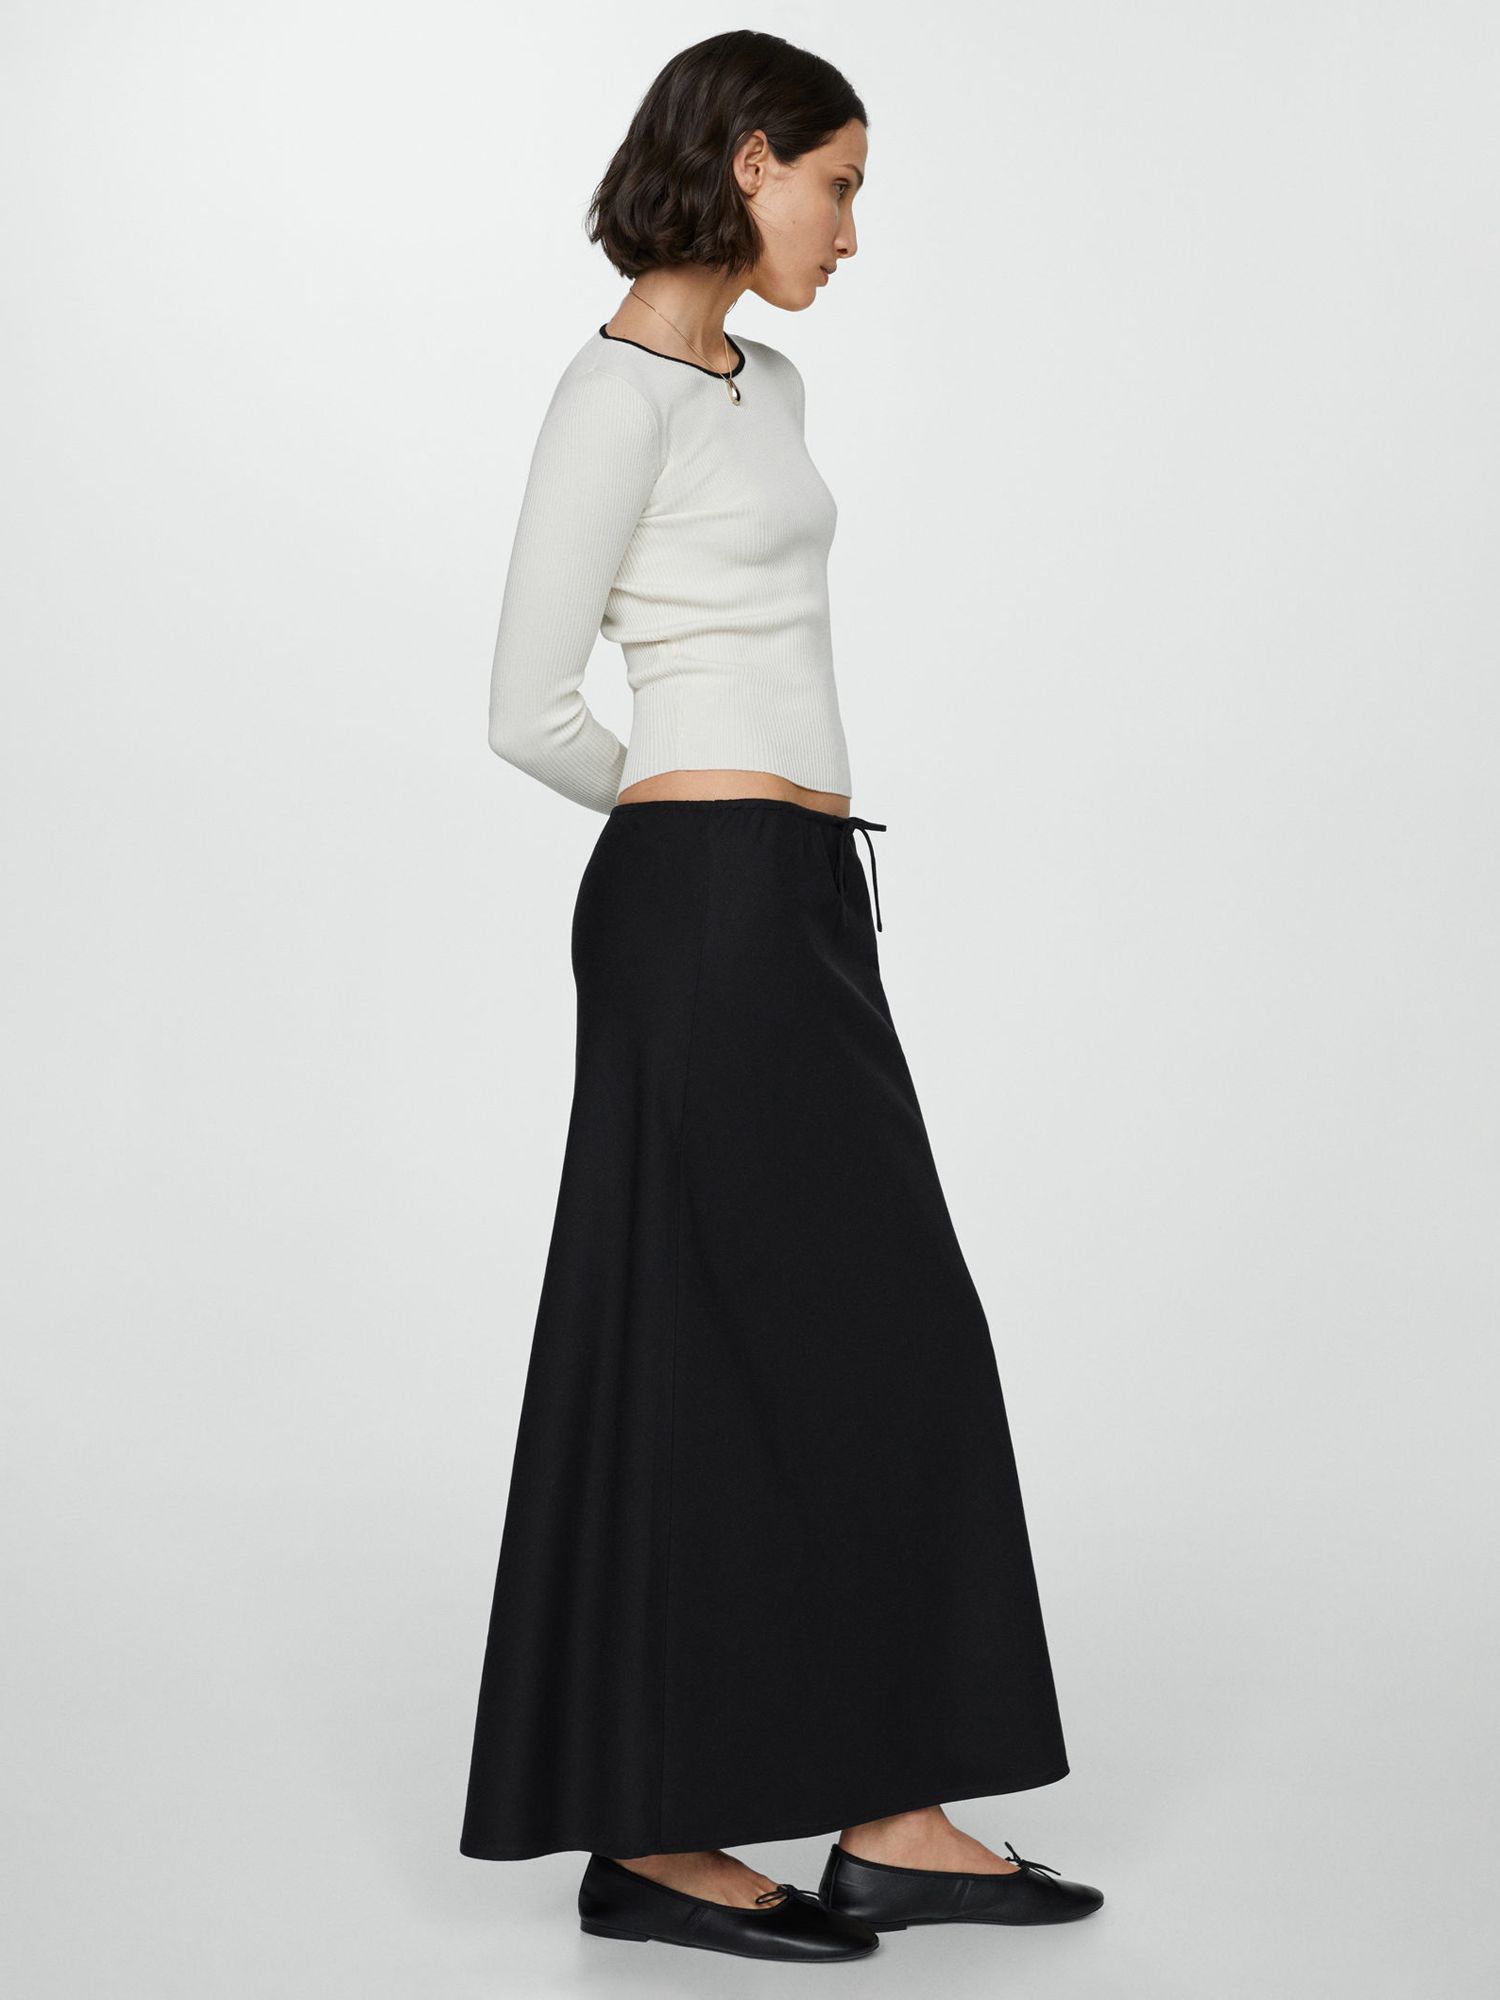 Mango Lago Linen Blend Maxi Skirt, Black, L